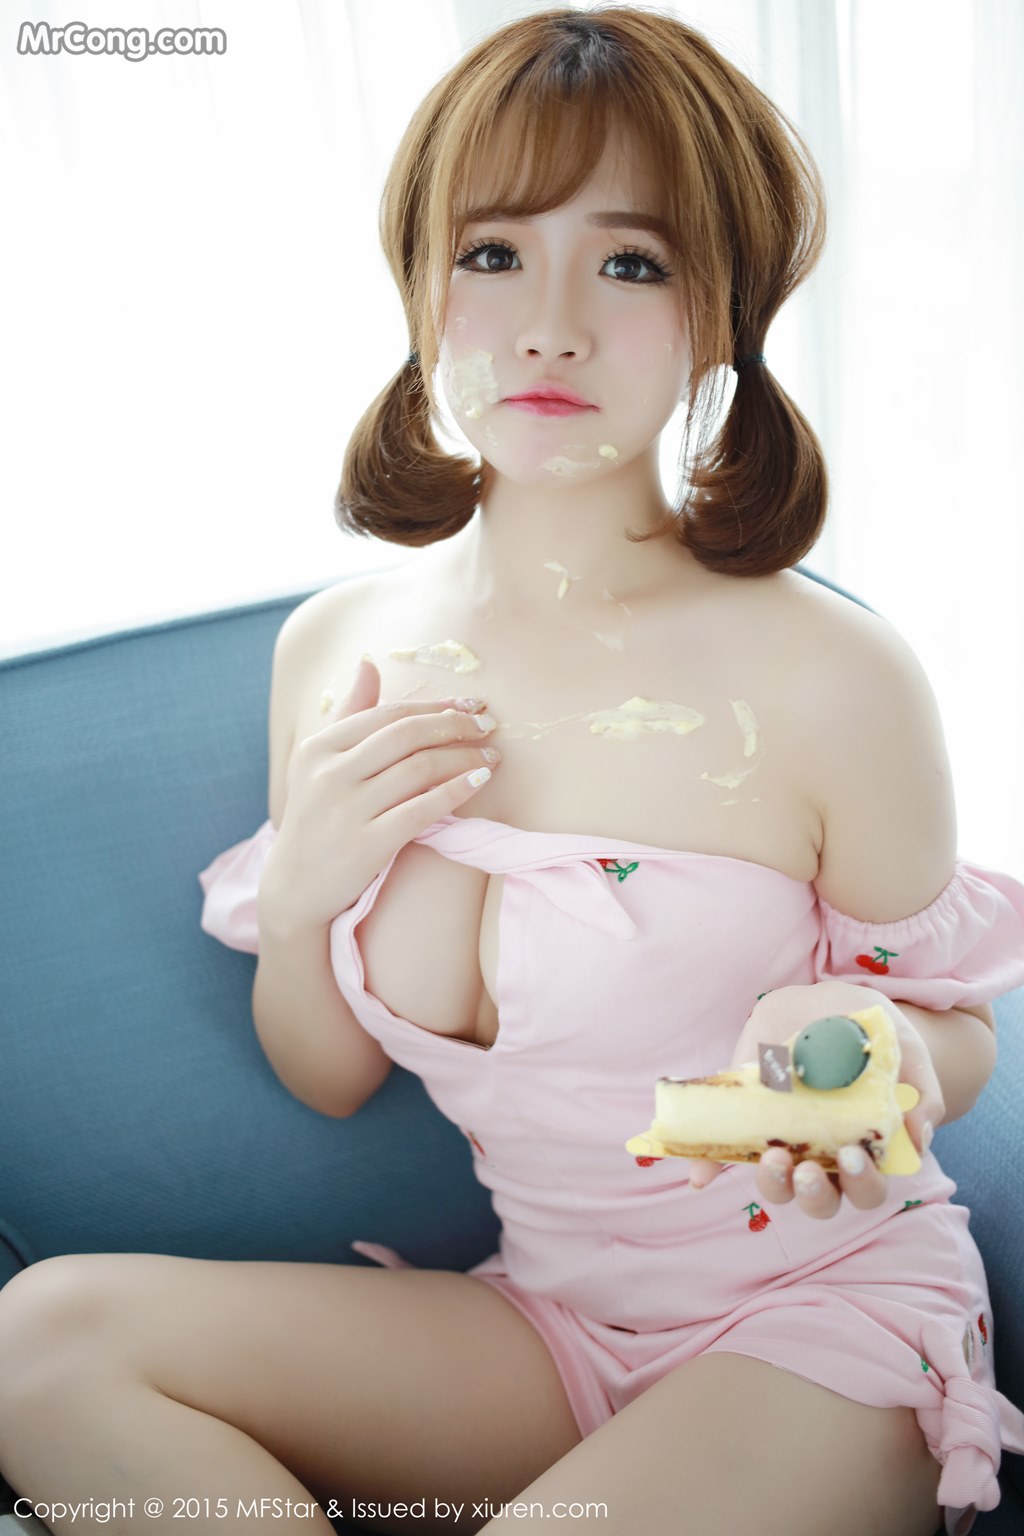 MFStar Vol.020: Model Xu Cake (徐 cake) (52 photos)